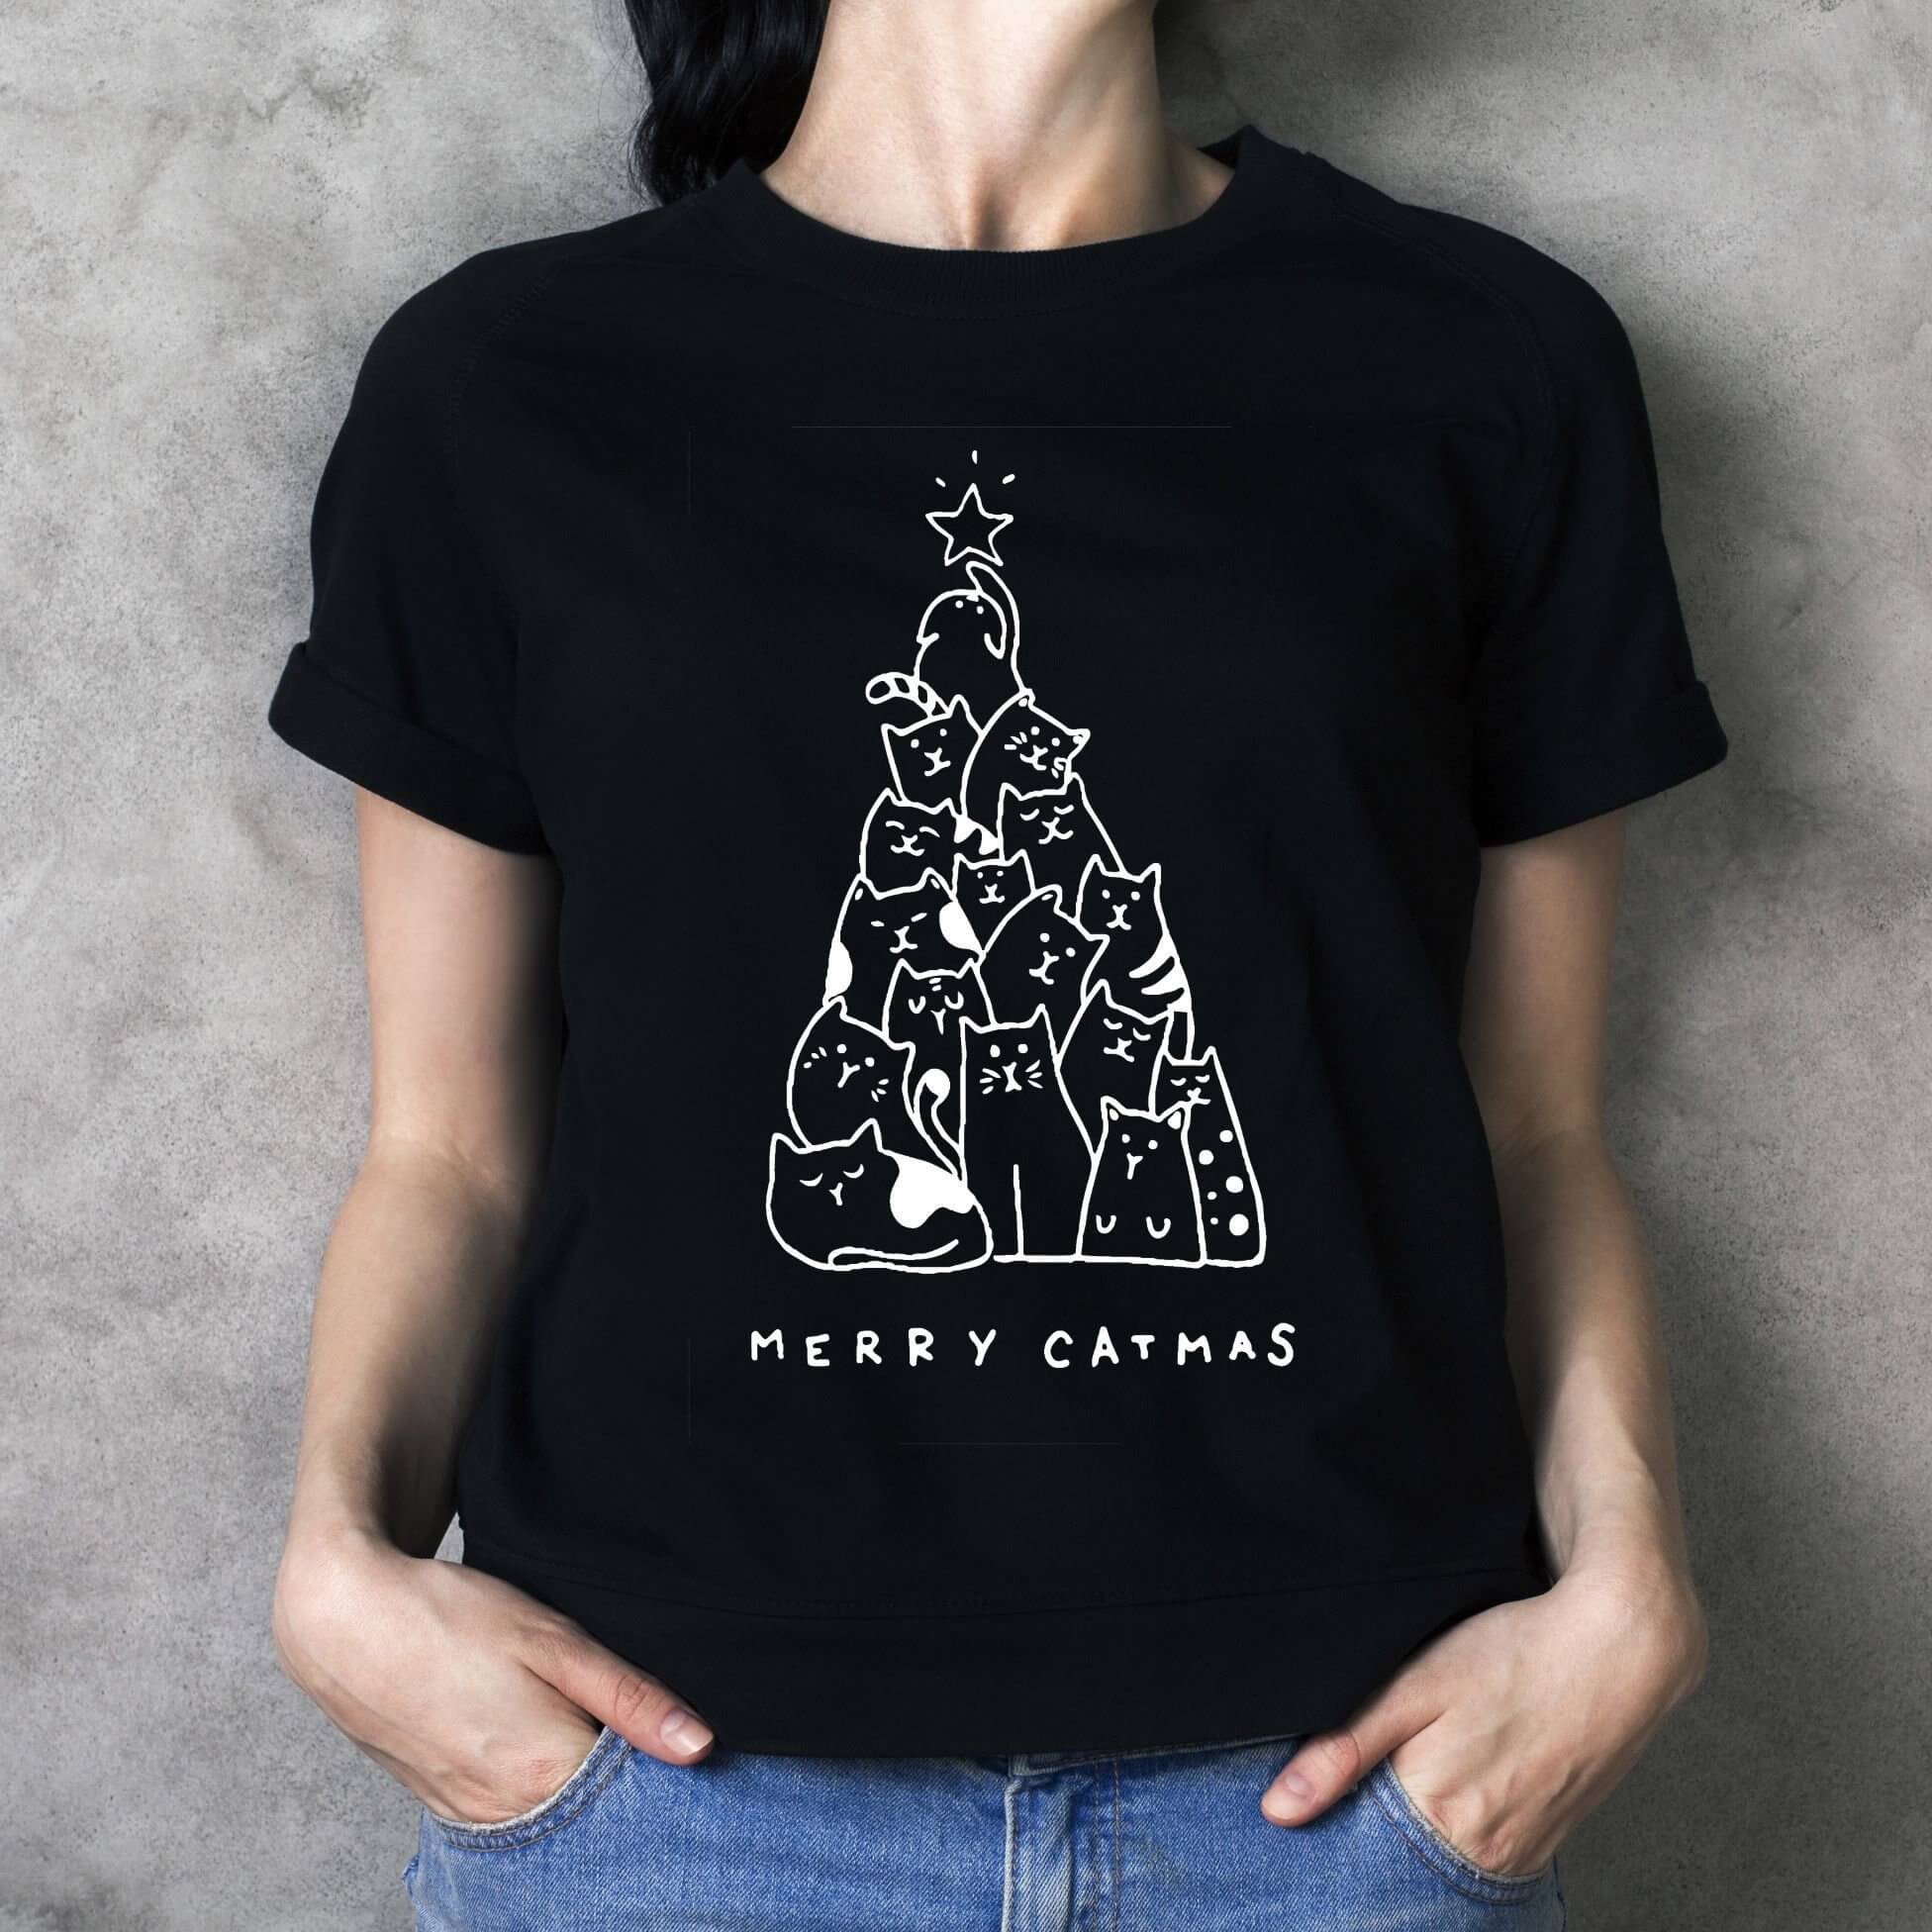 Merry Catmas T Shirt